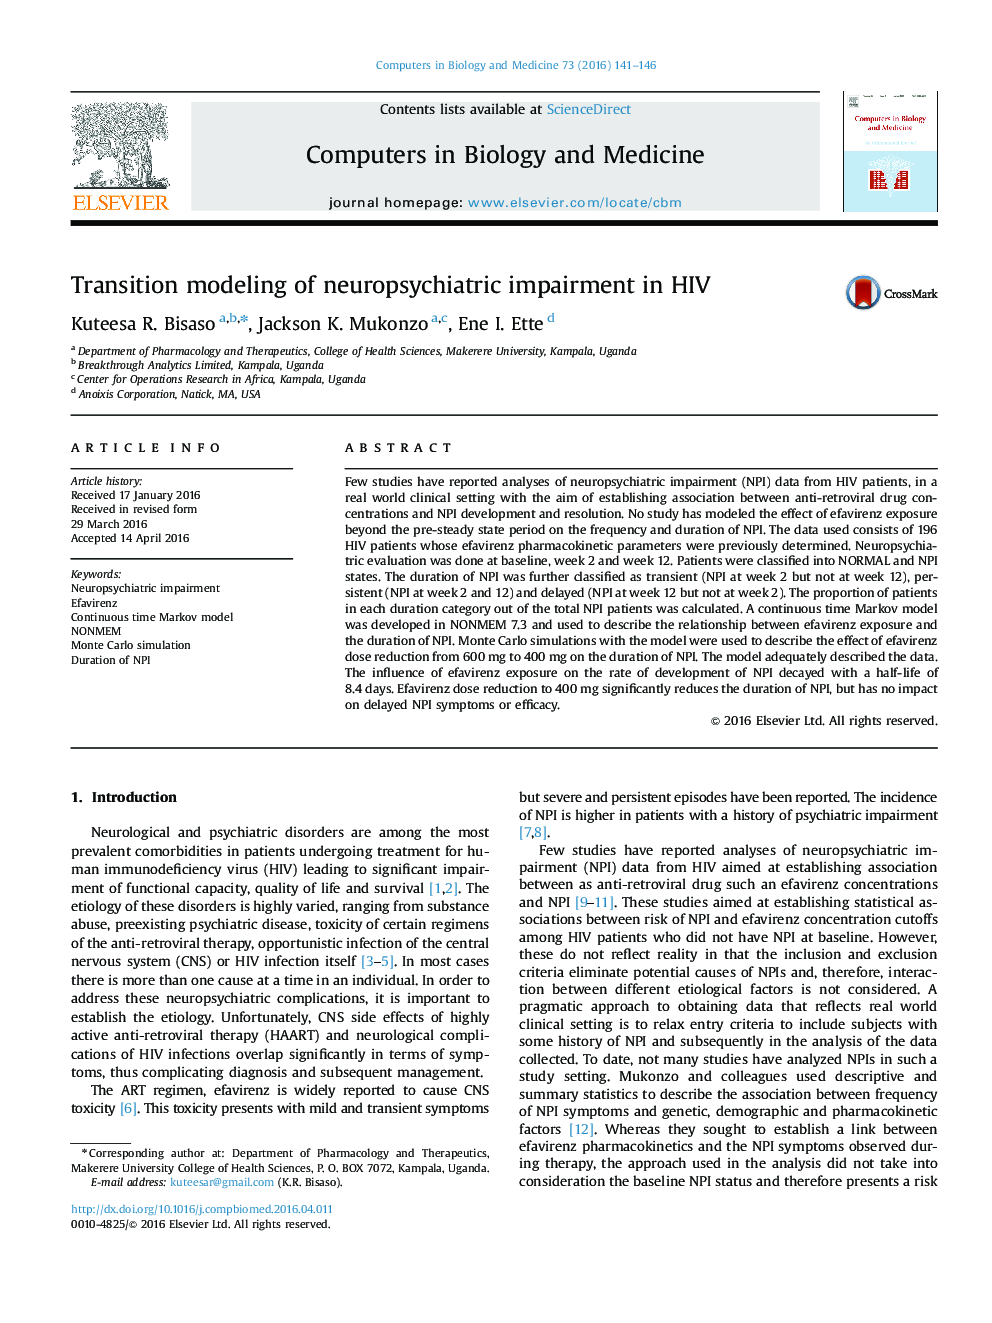 Transition modeling of neuropsychiatric impairment in HIV